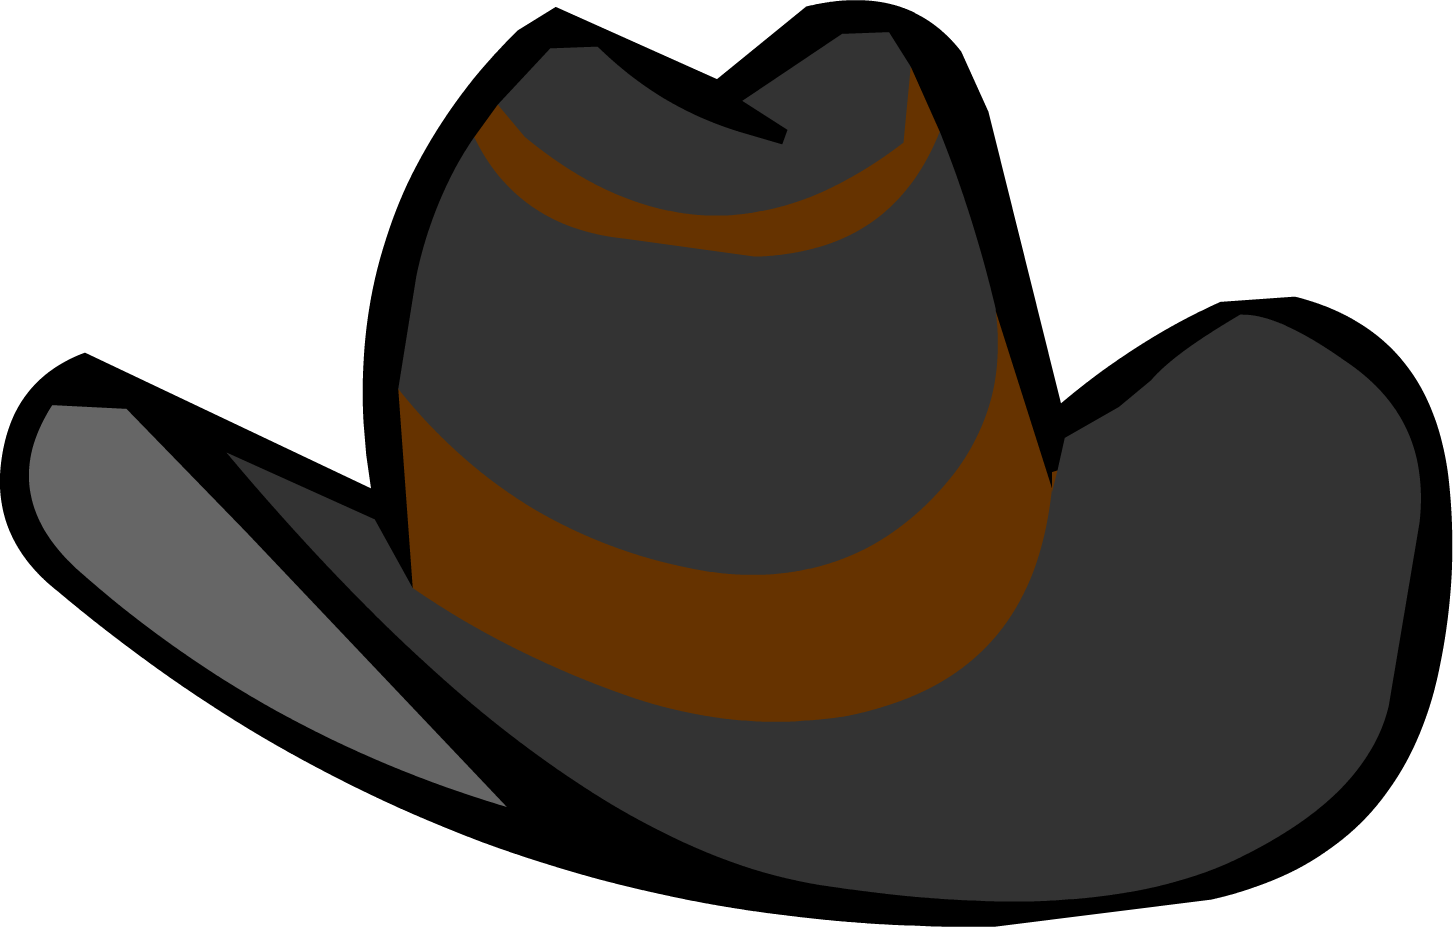 Similar Cowboy Hat PNG Image